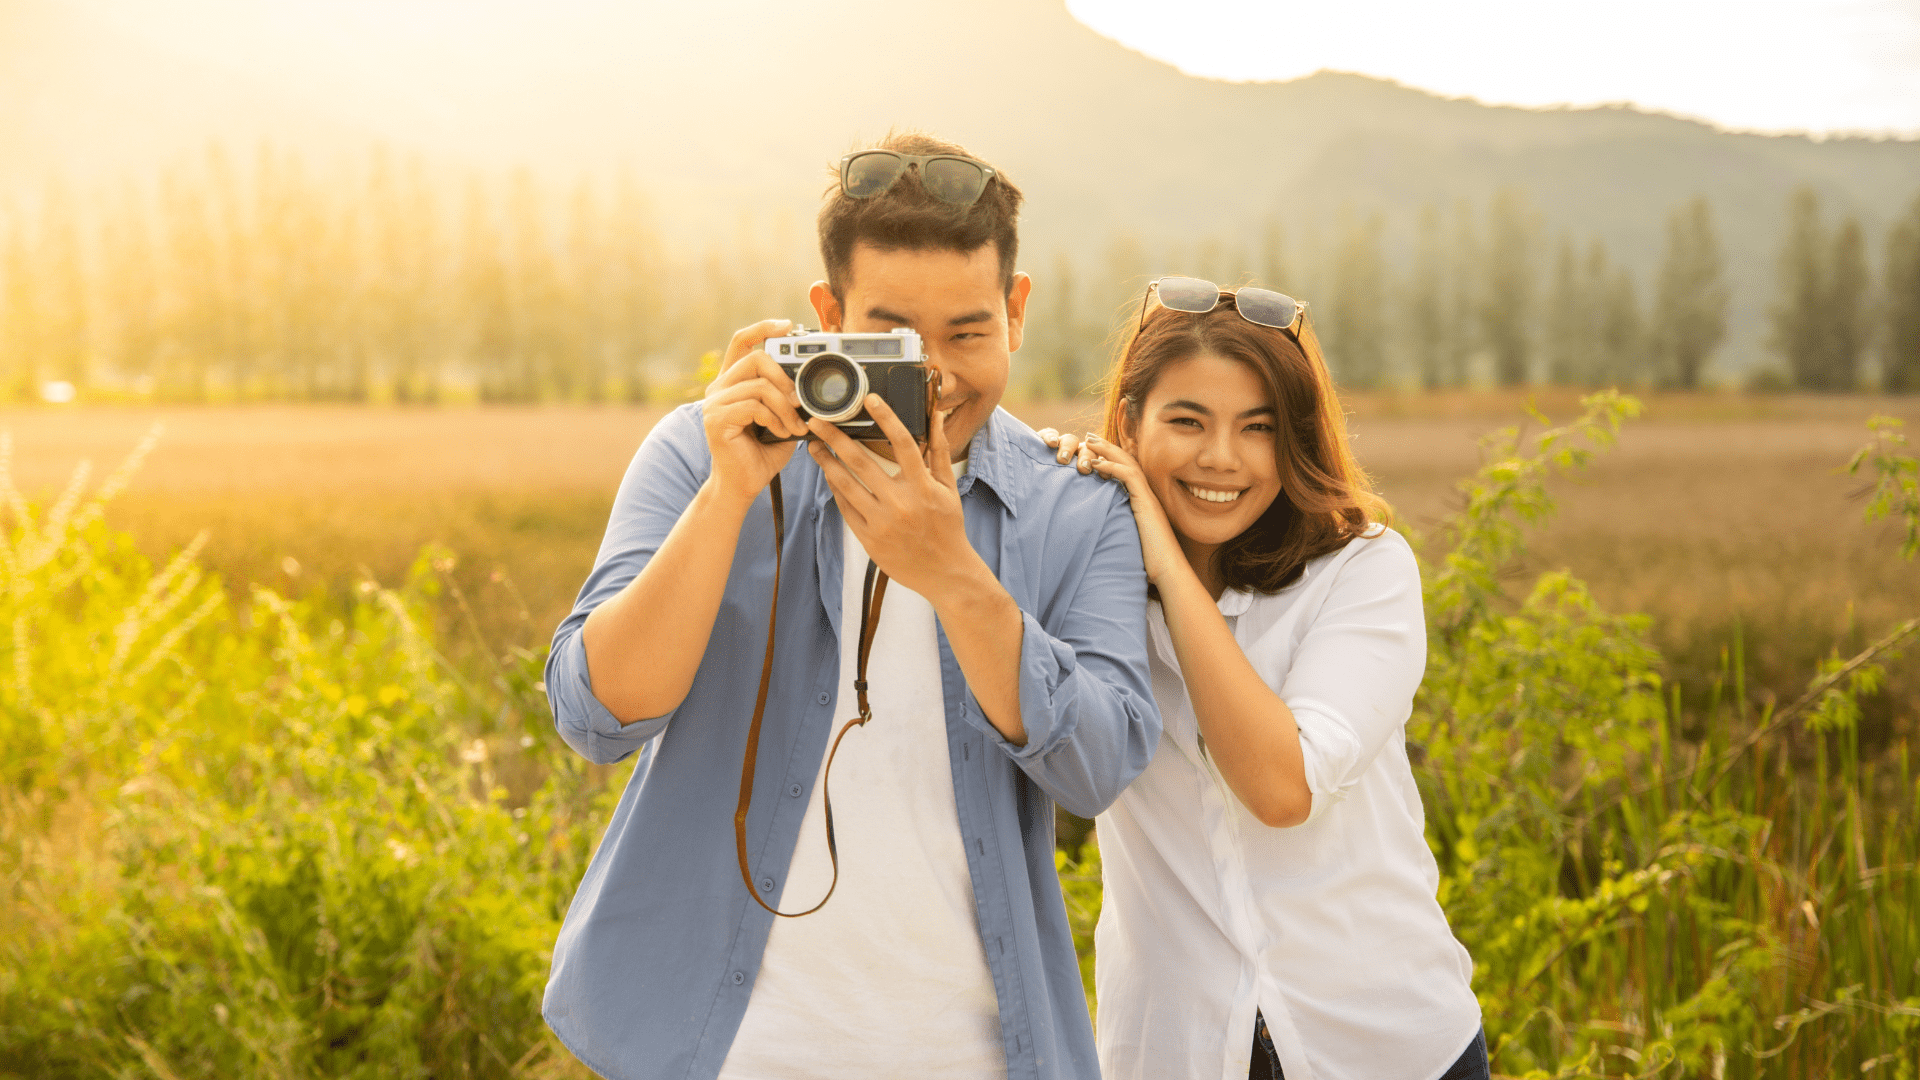 honeymoon honeymoon budget honeymoon checklist Honeymoon Planning honeymoon tips honeymoon malaysia